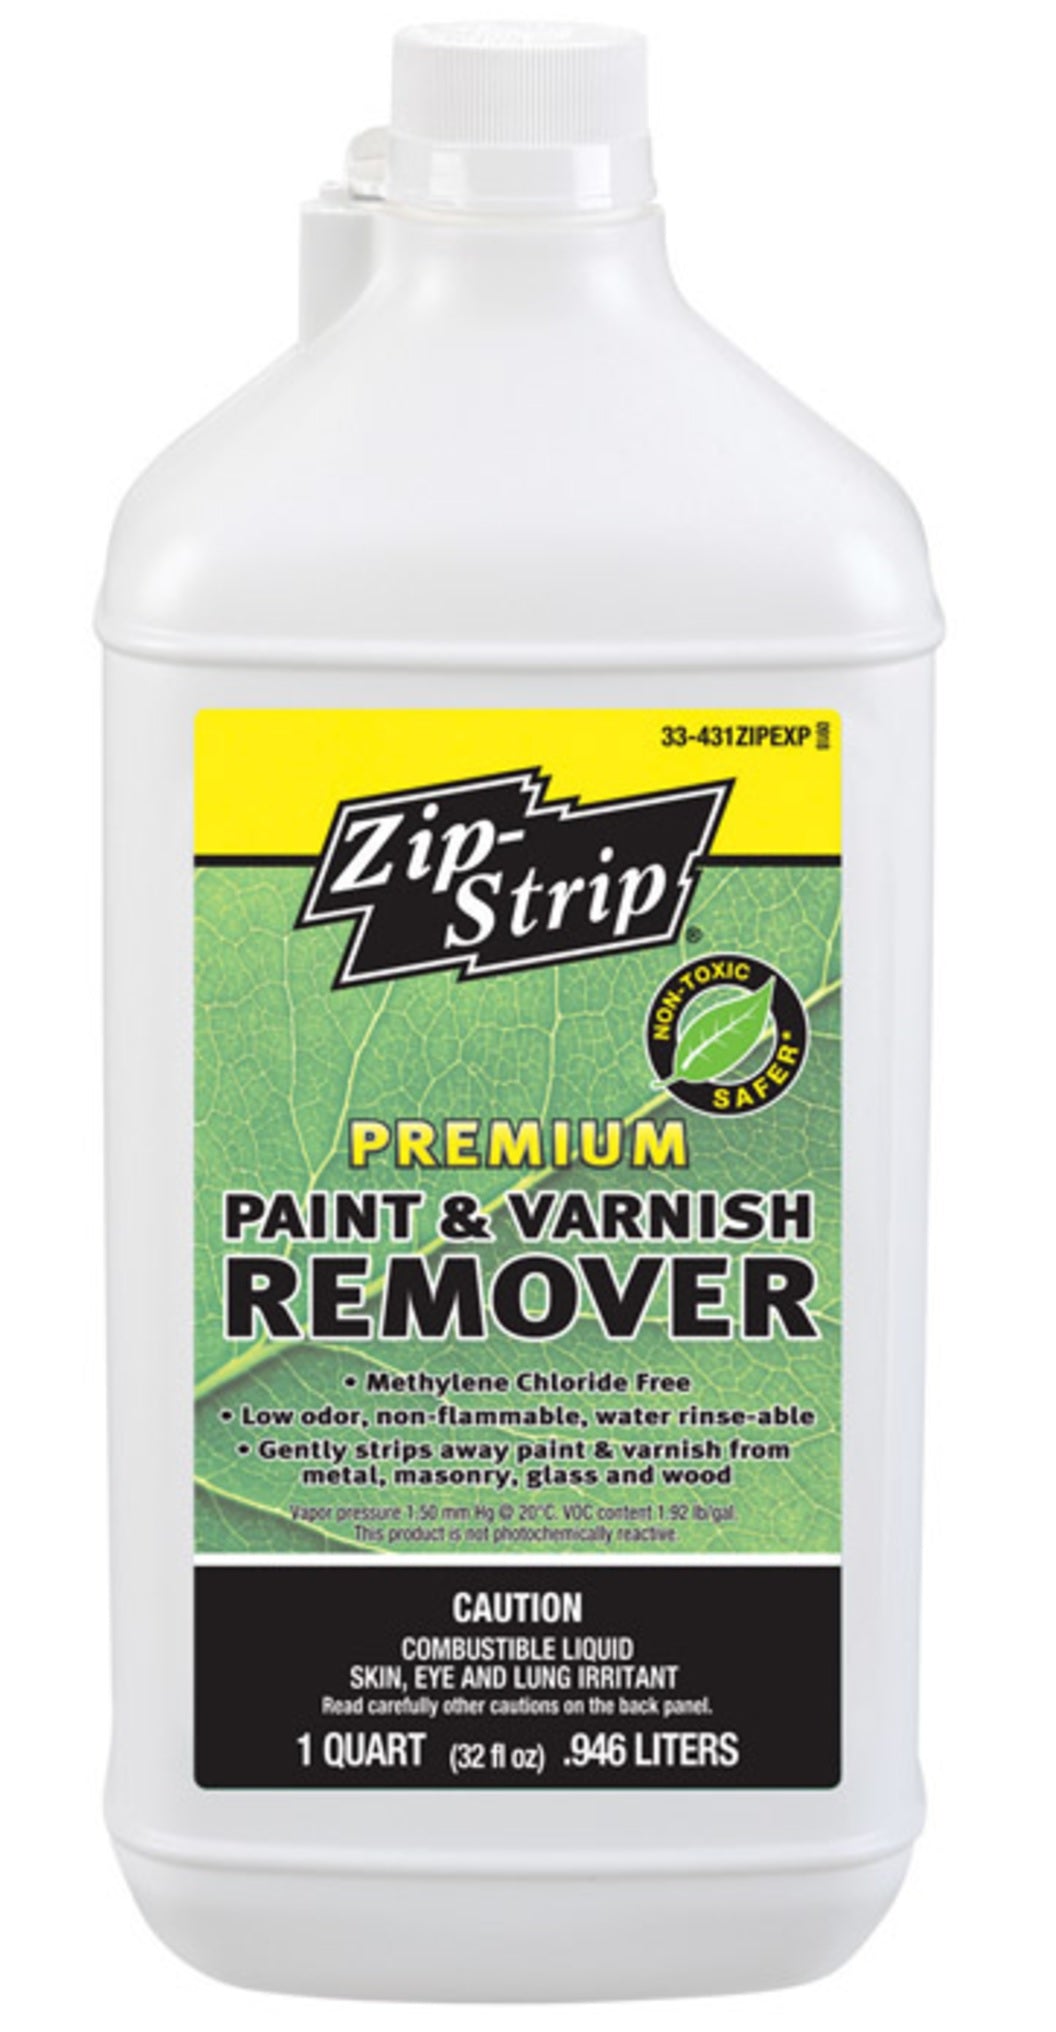 Zip-Strip 33-431ZIPEXP Paint & Varnish Remover, 1 Quart